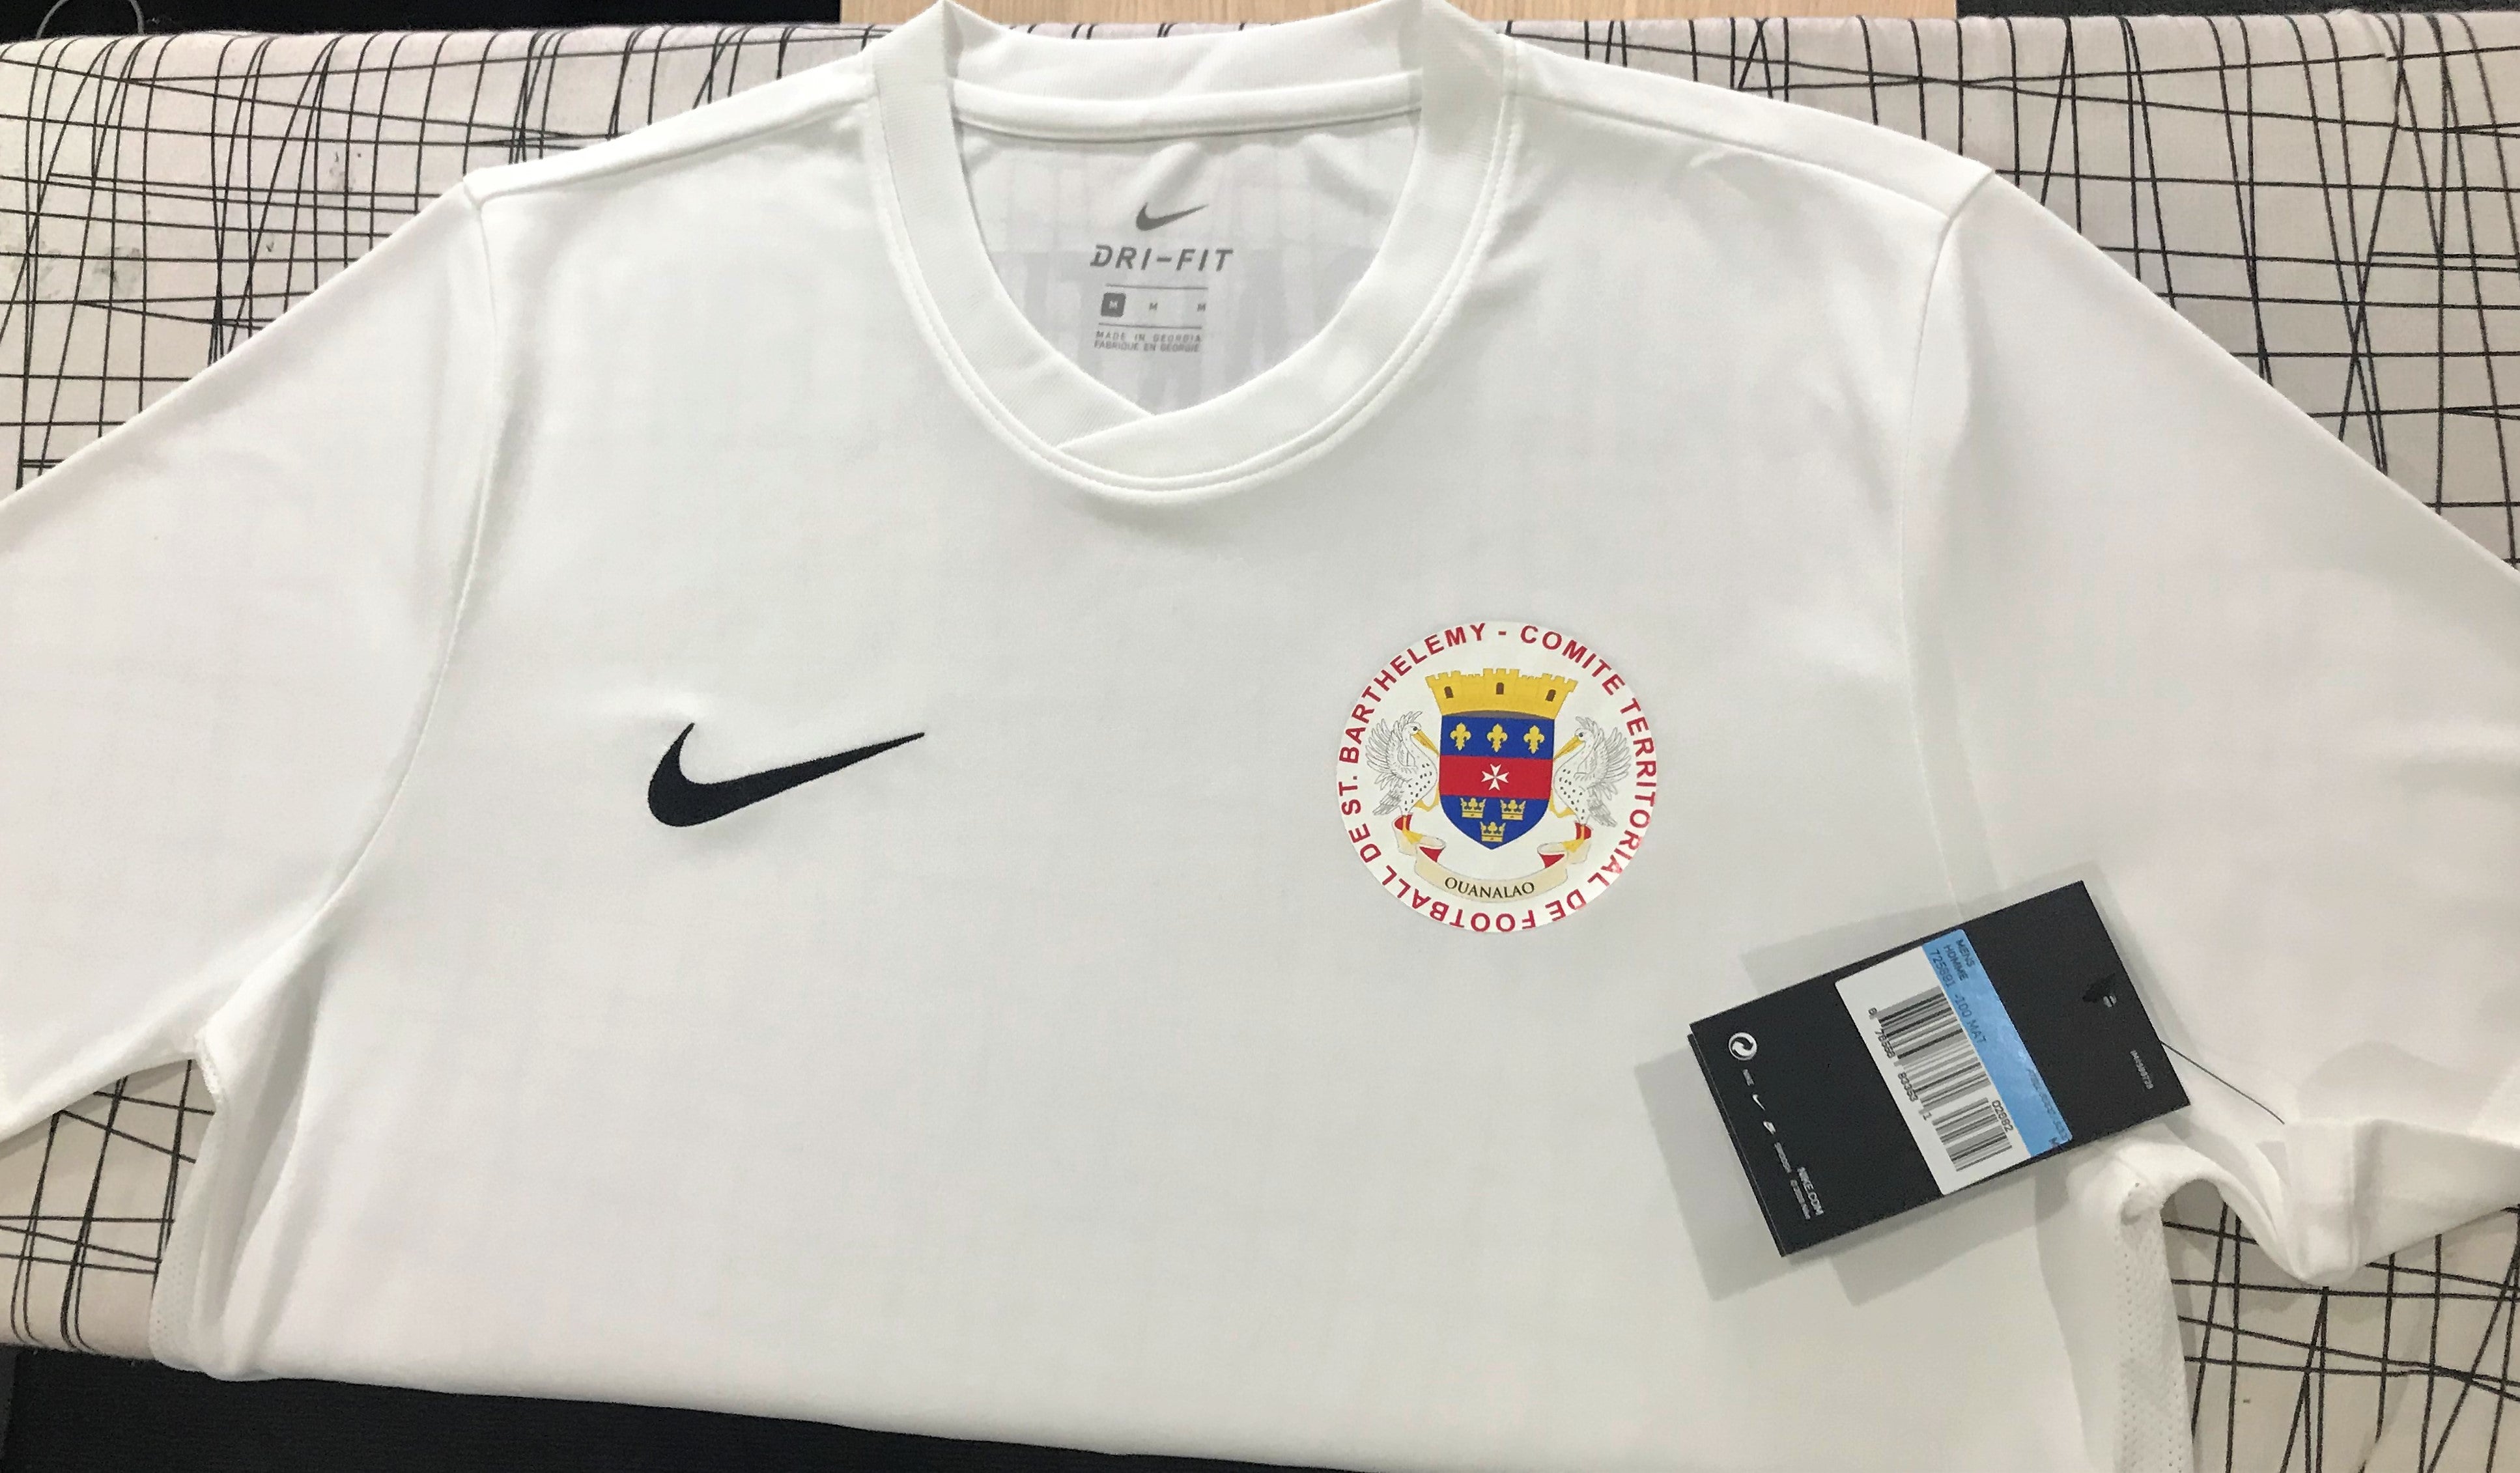 Saint Barthélemy 2018-19 Home Jersey/Shirt